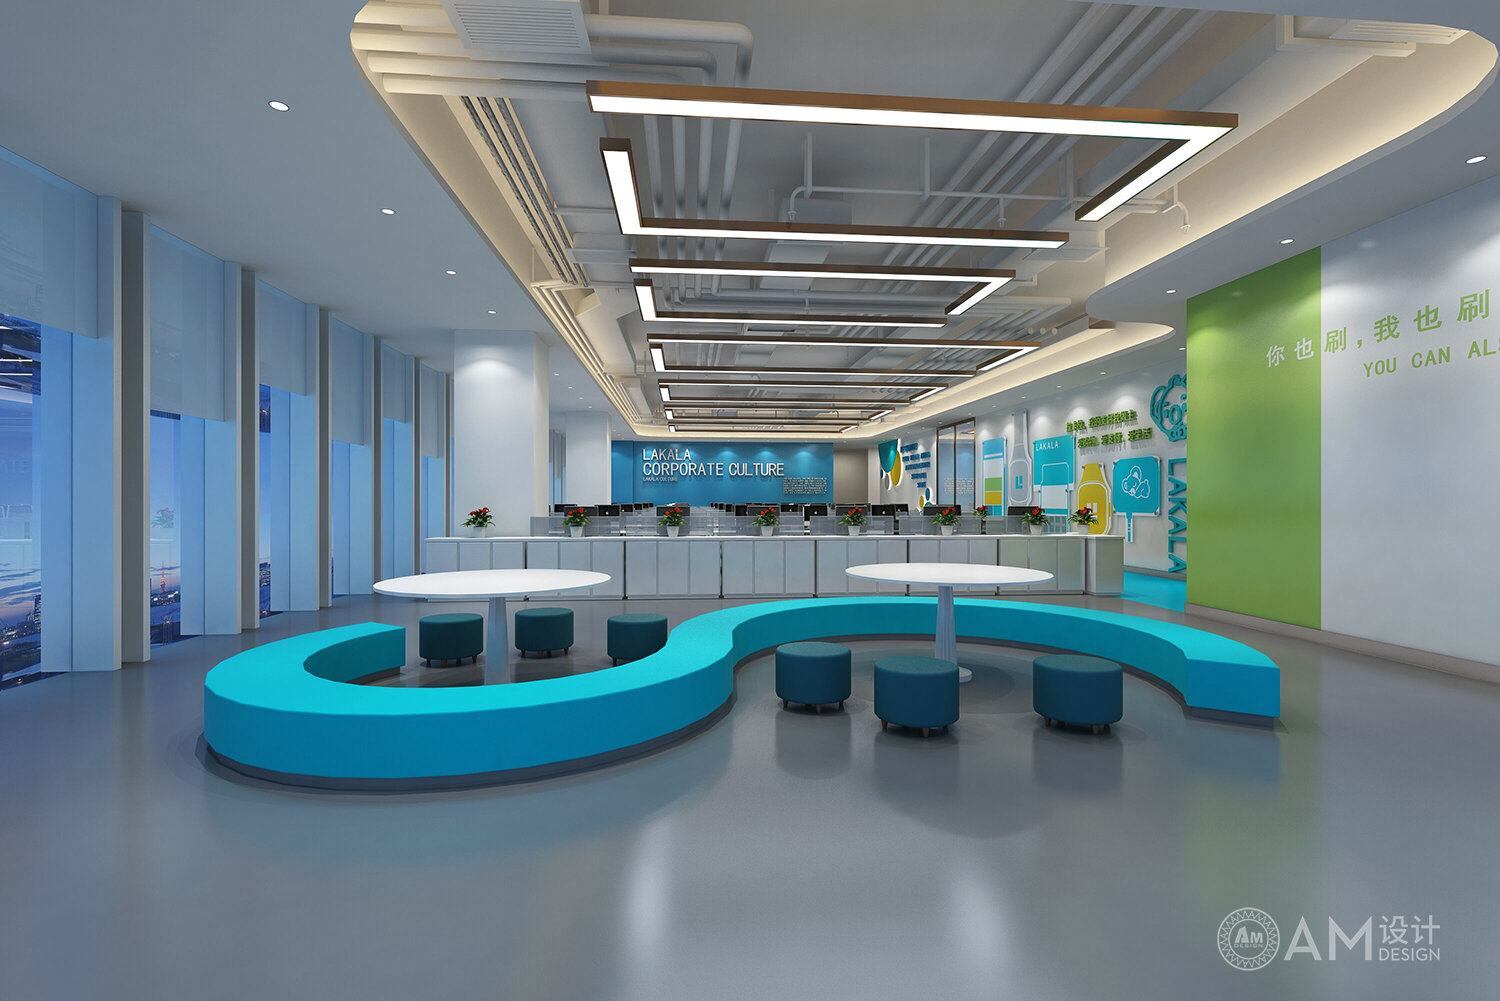 AM|Lakala Holding Group Office Building Design_rest area